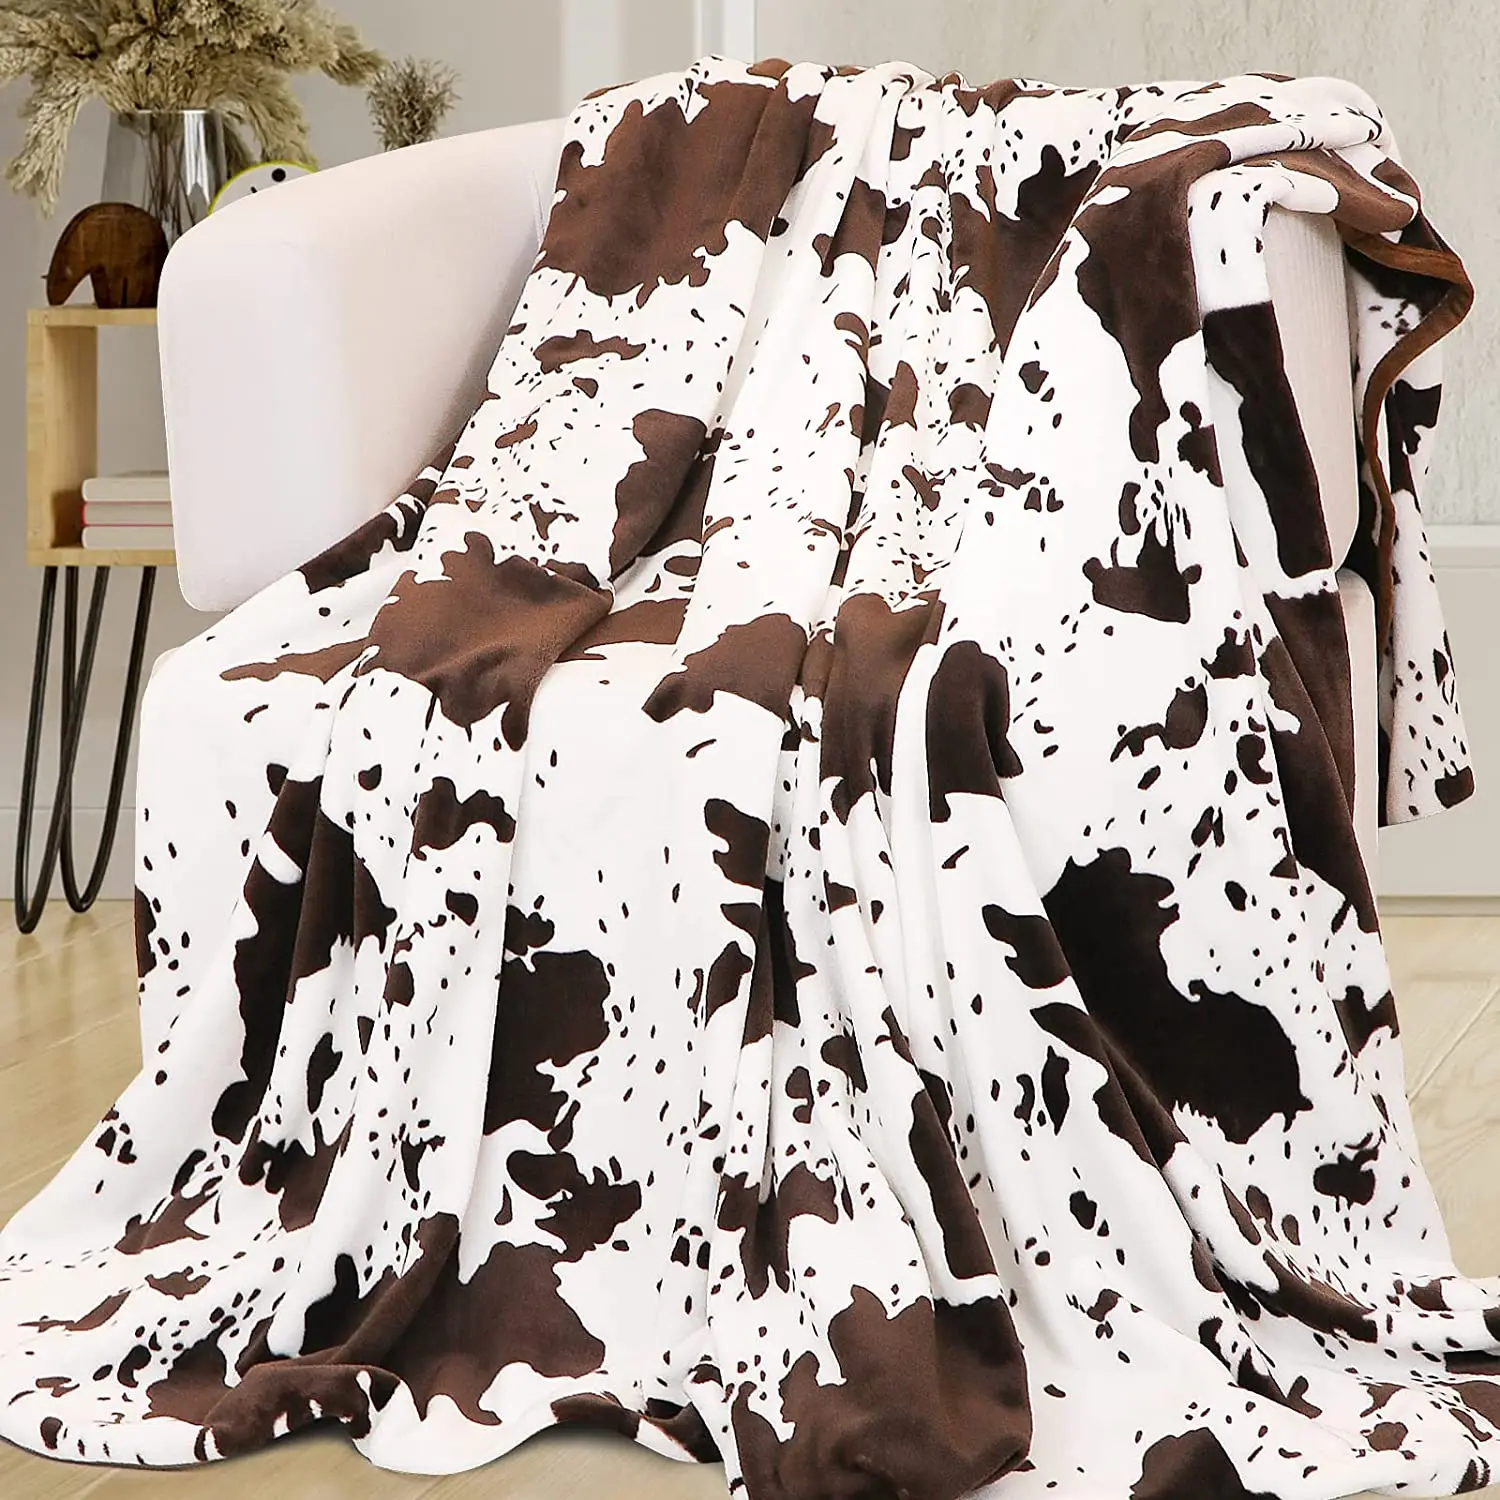 Cow Design Blanket Throws Cow Print Blanket Plush Flannel Fleece Throw Blanket Soft Warm  Travel Camping Home Farm Decorative